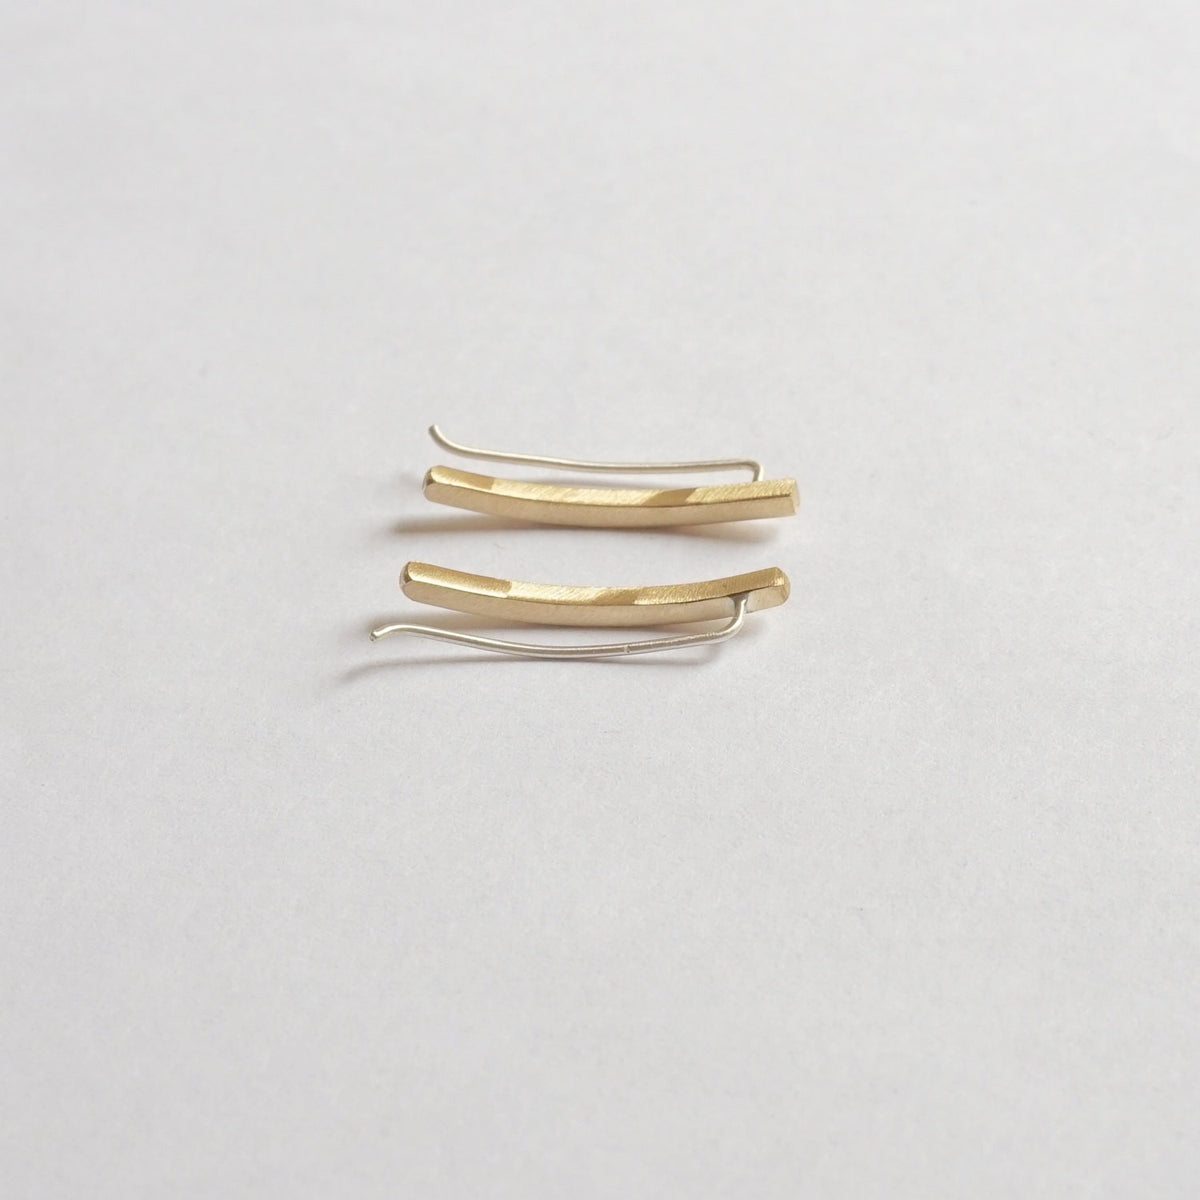 Minimalistic Distinctive Hand-Made Square Ear Climbers - 0245 - Virginia Wynne Designs